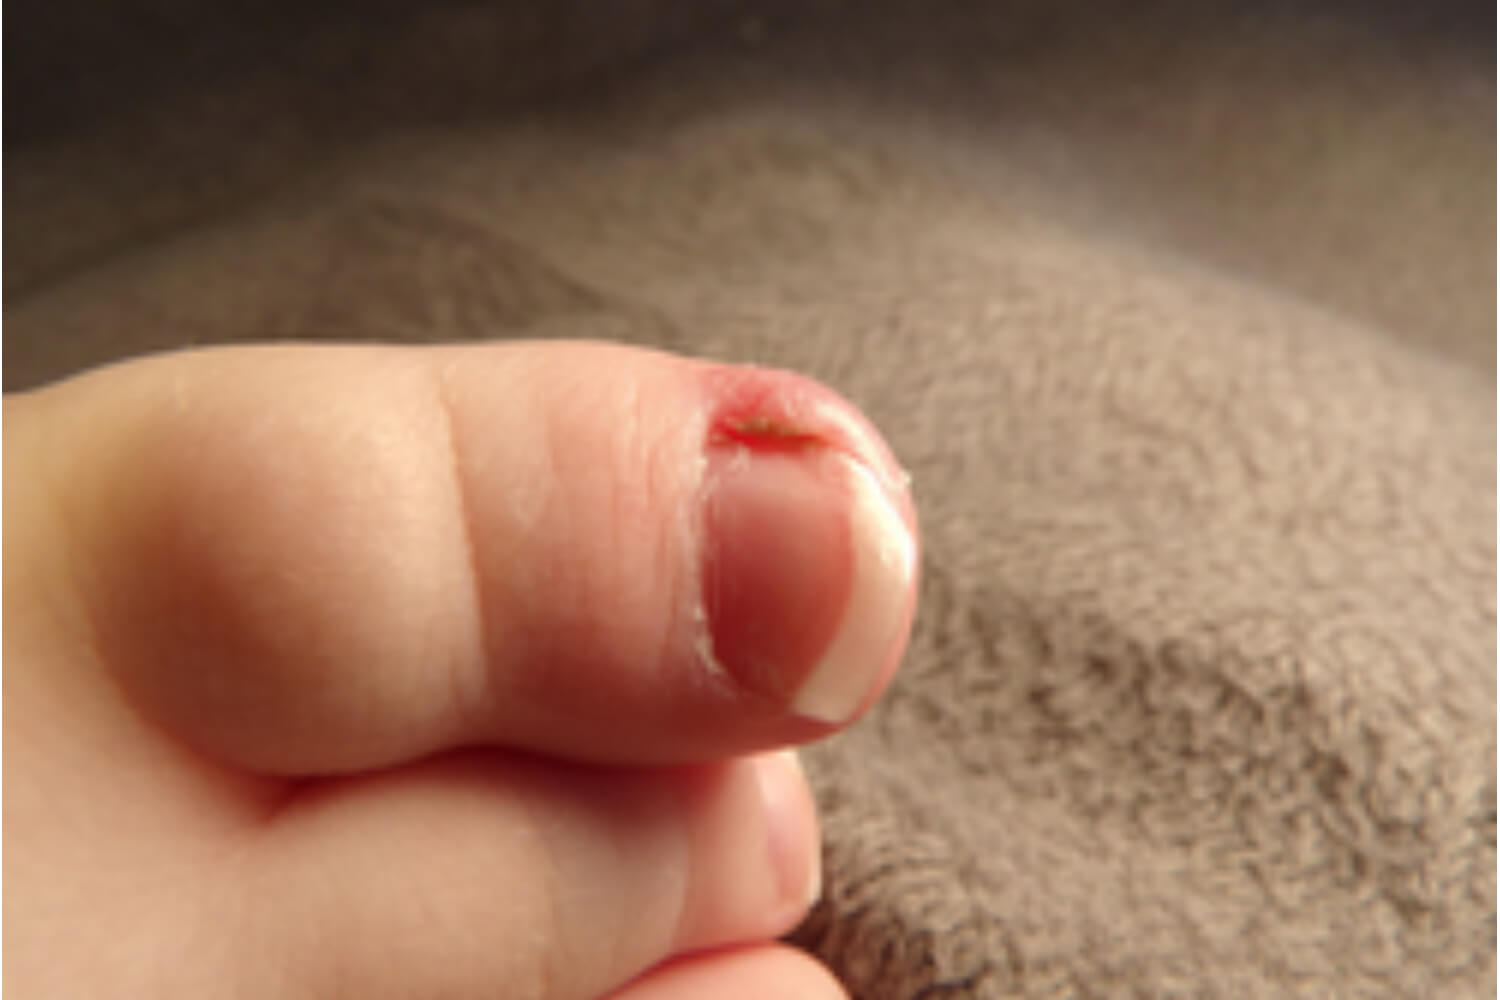 ingrown toe nails in baby